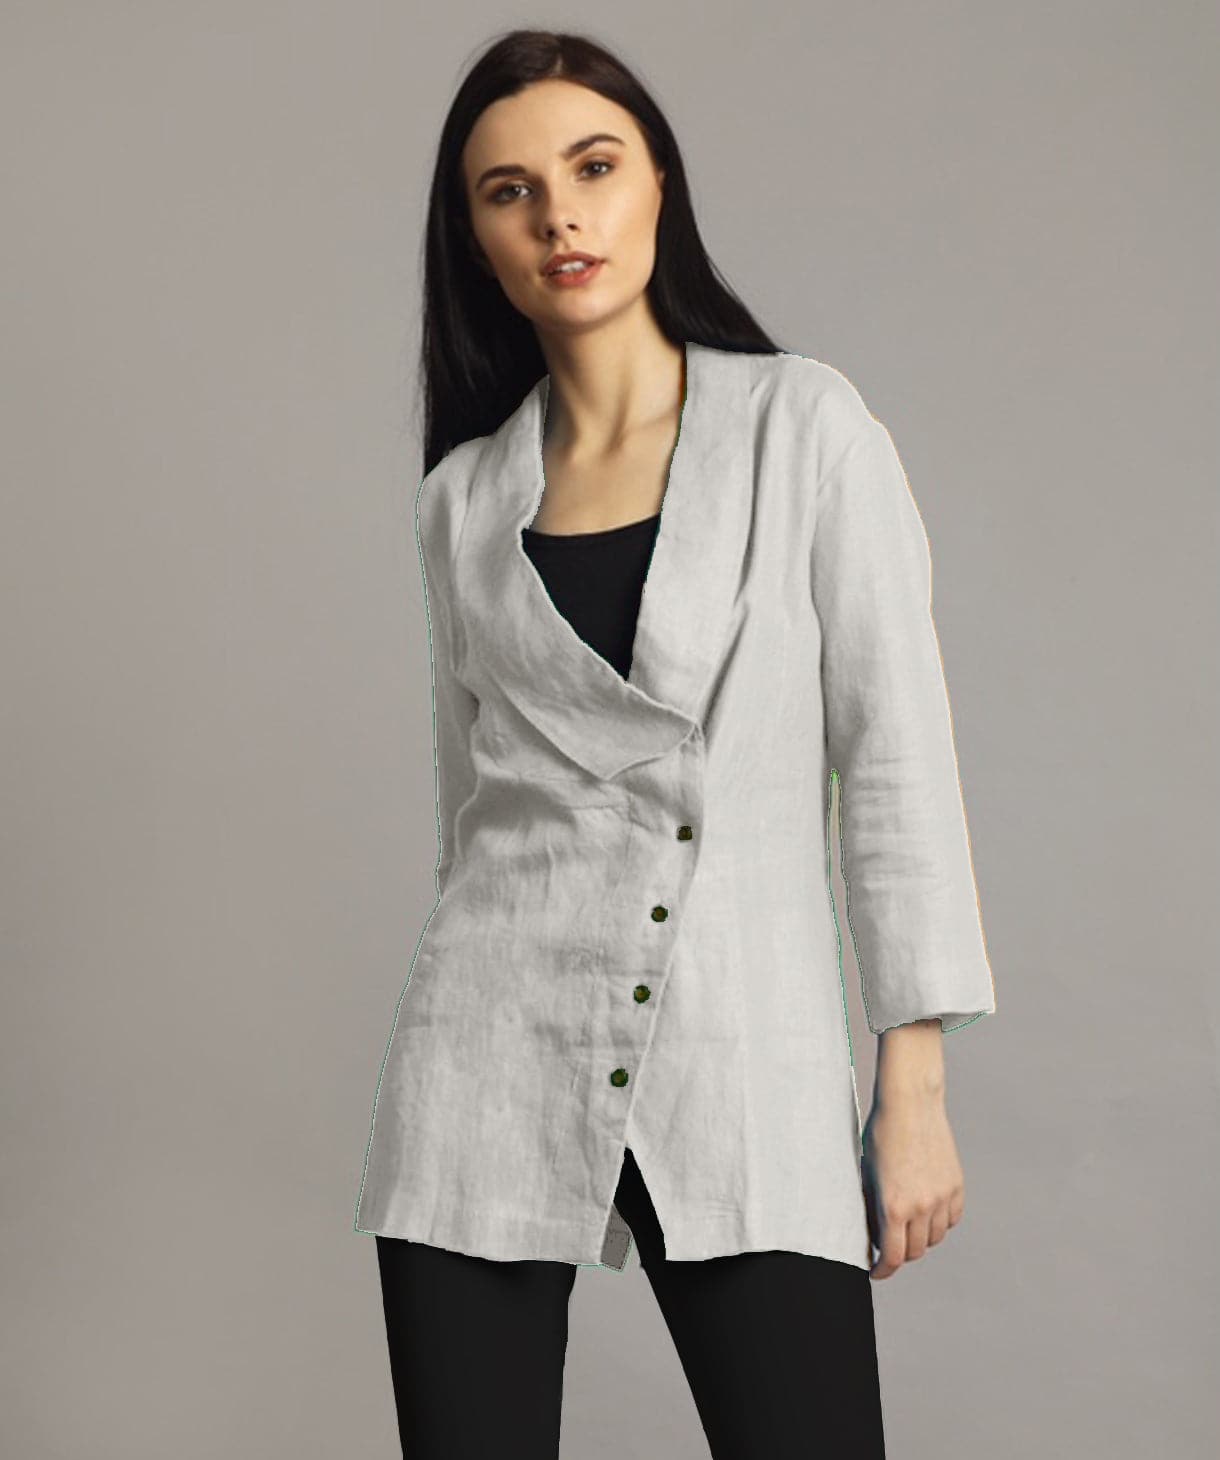 Plus White Linen Jacket Style Tunic - Uptownie